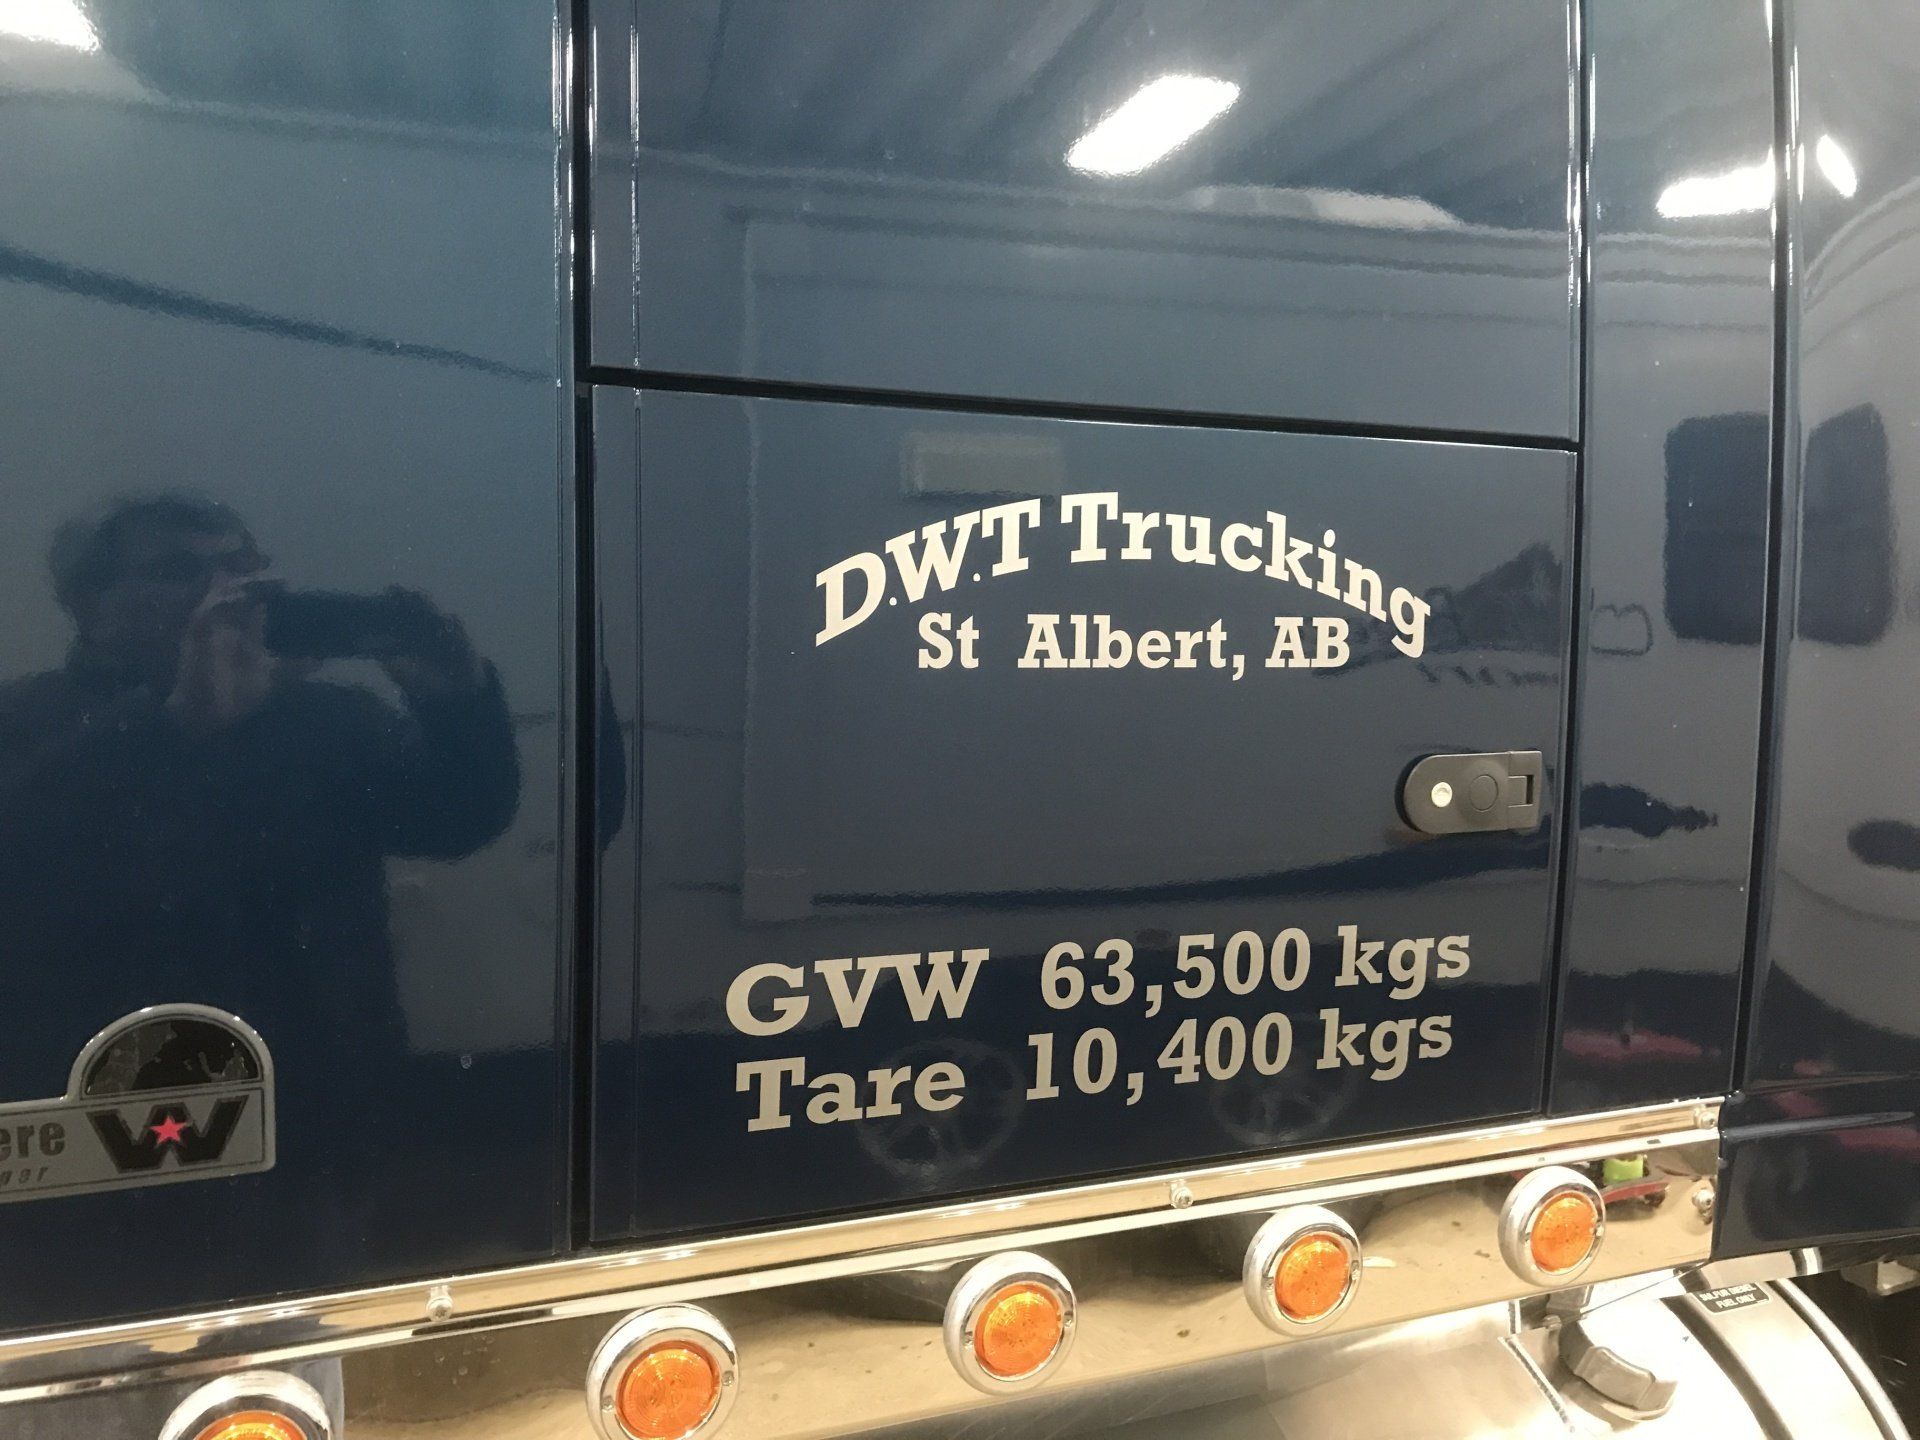 Haul Weights - GVW & Tare - Trucks